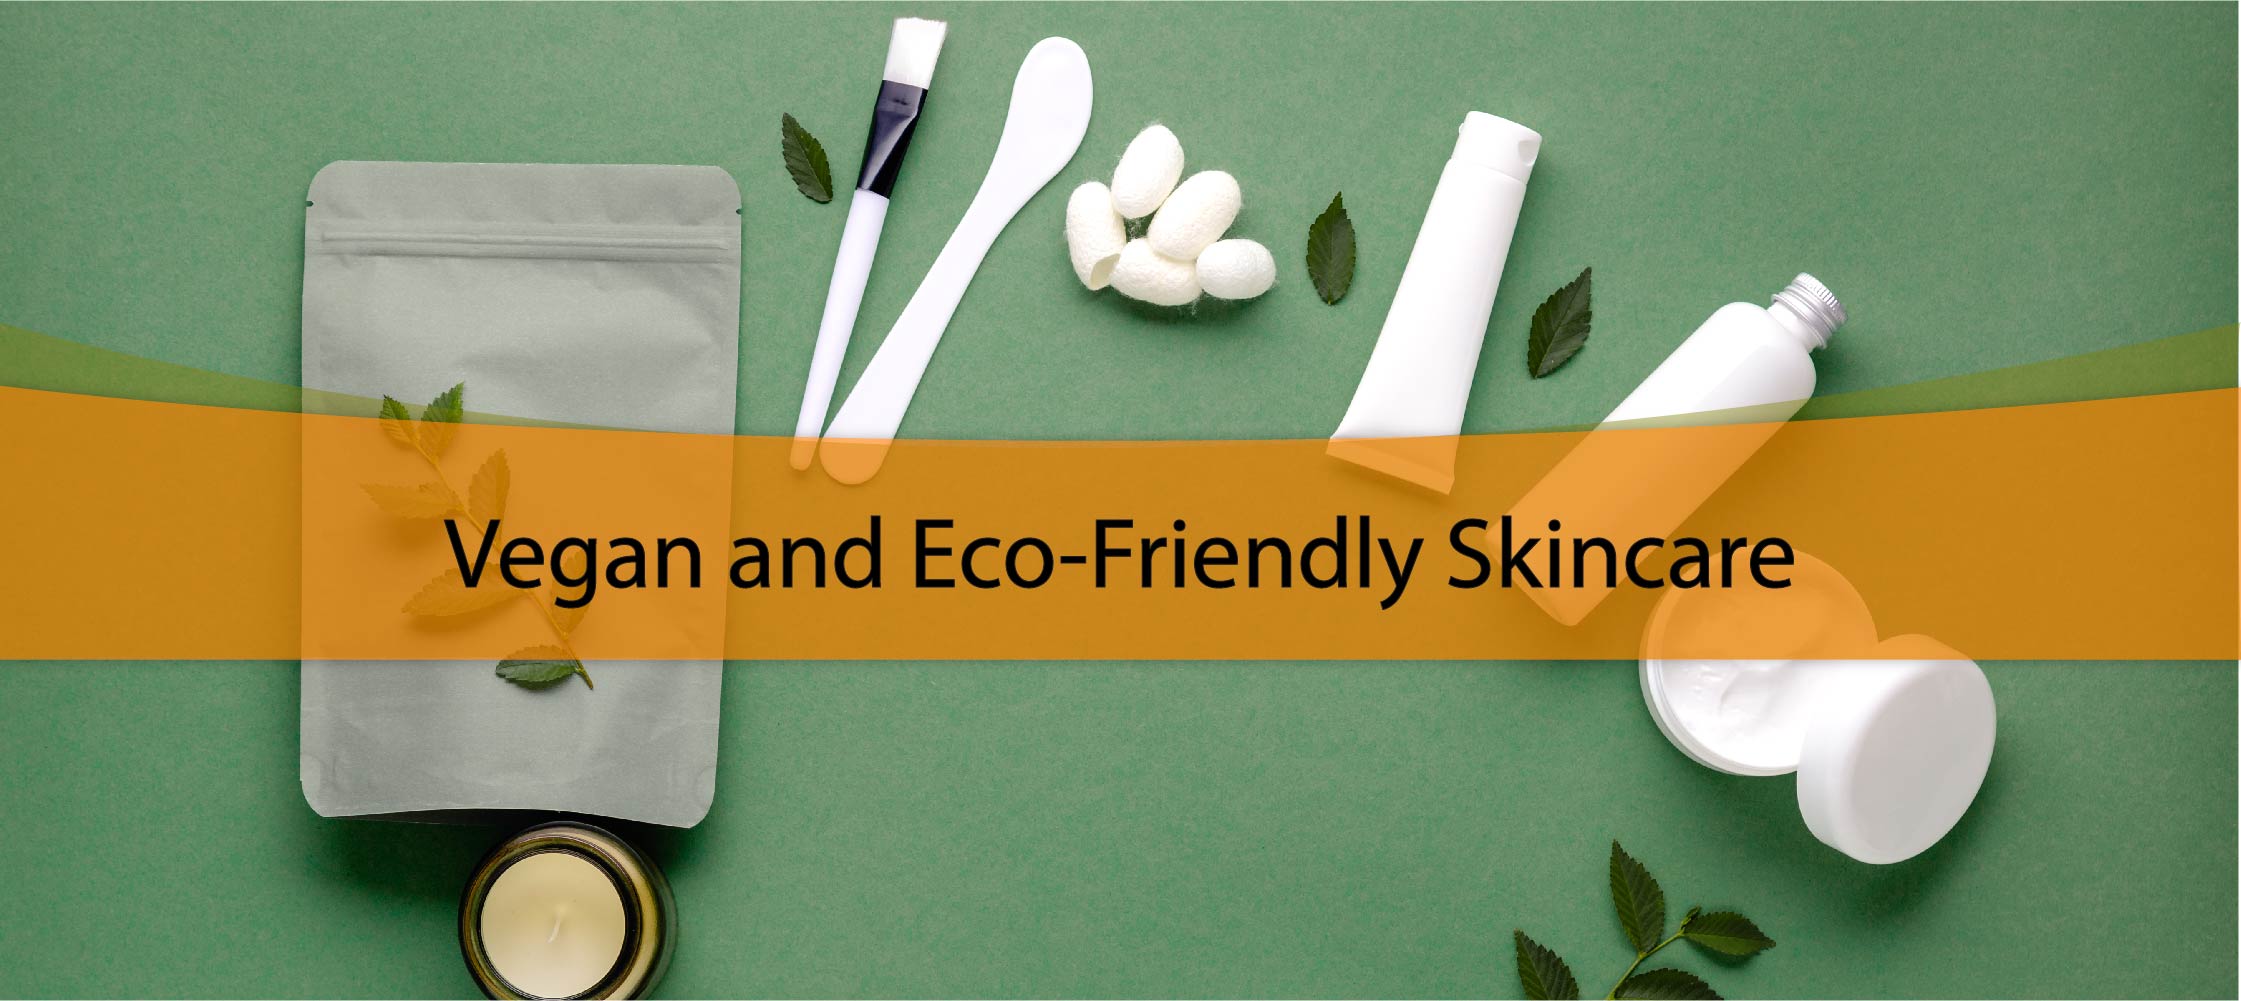 Vegan and Eco-Friendly Skincare